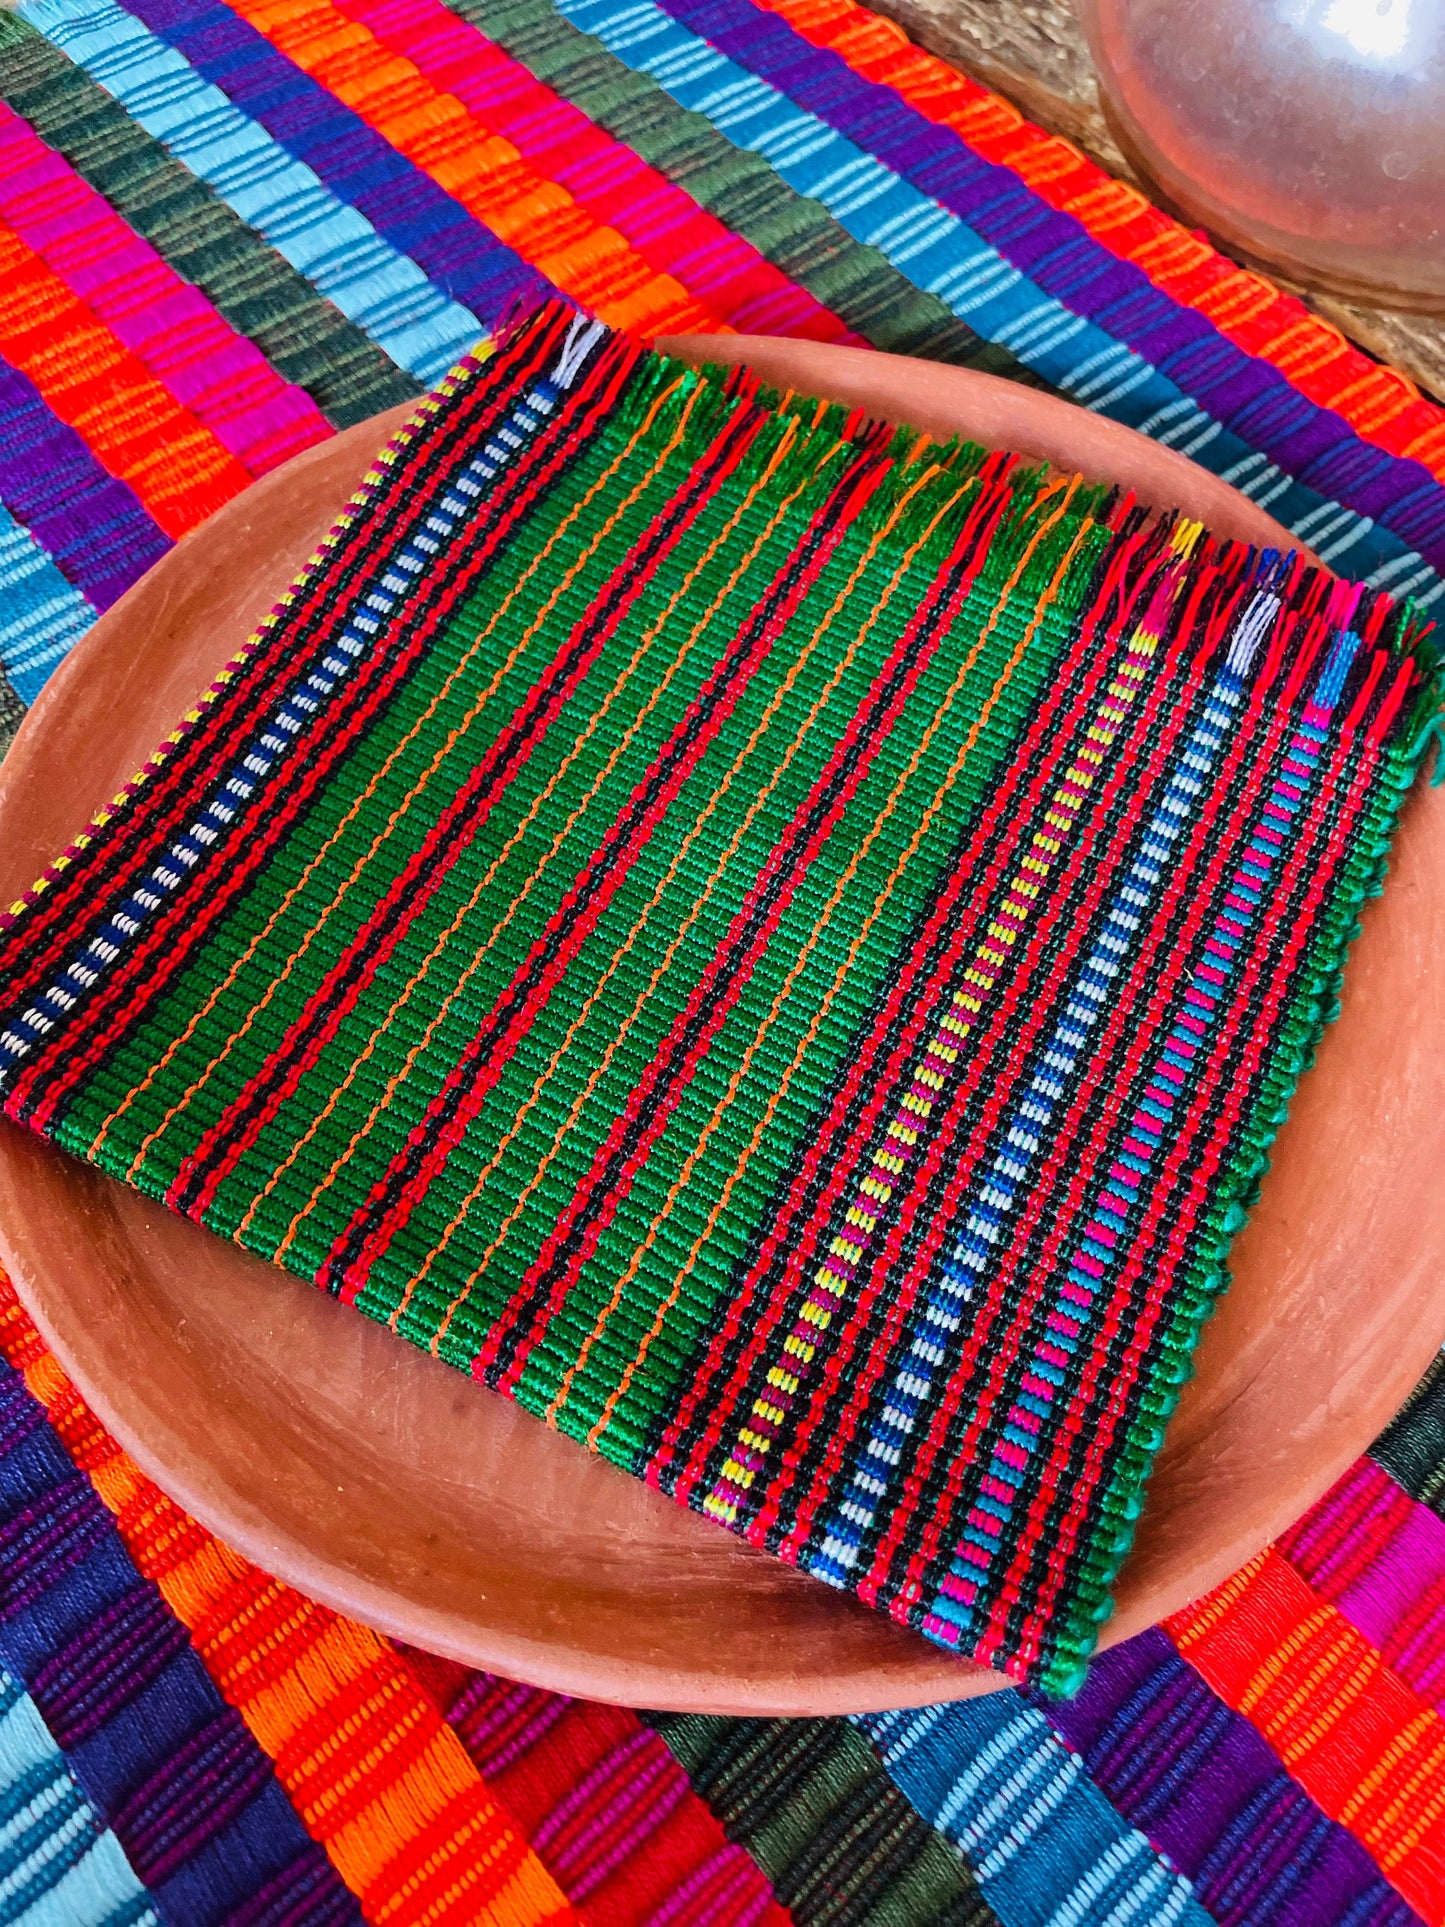 Colorful handwoven napkin